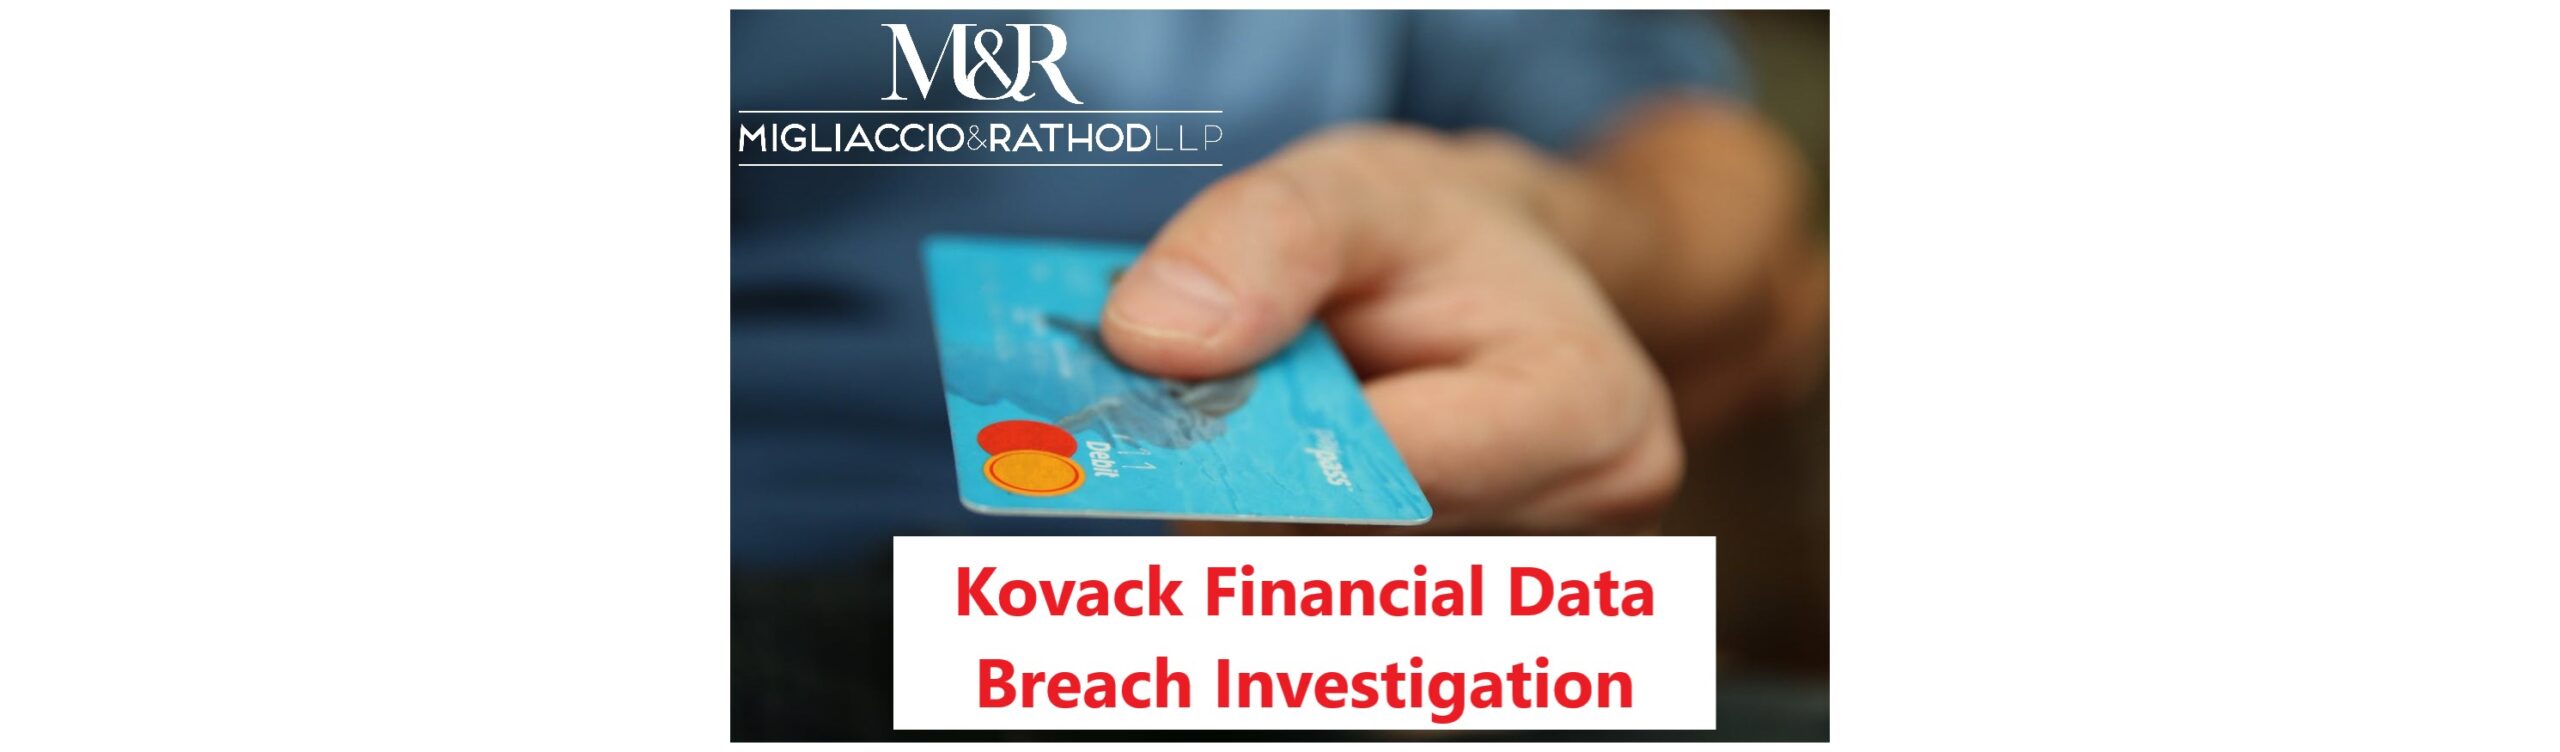 Kovack Financial Data Breach